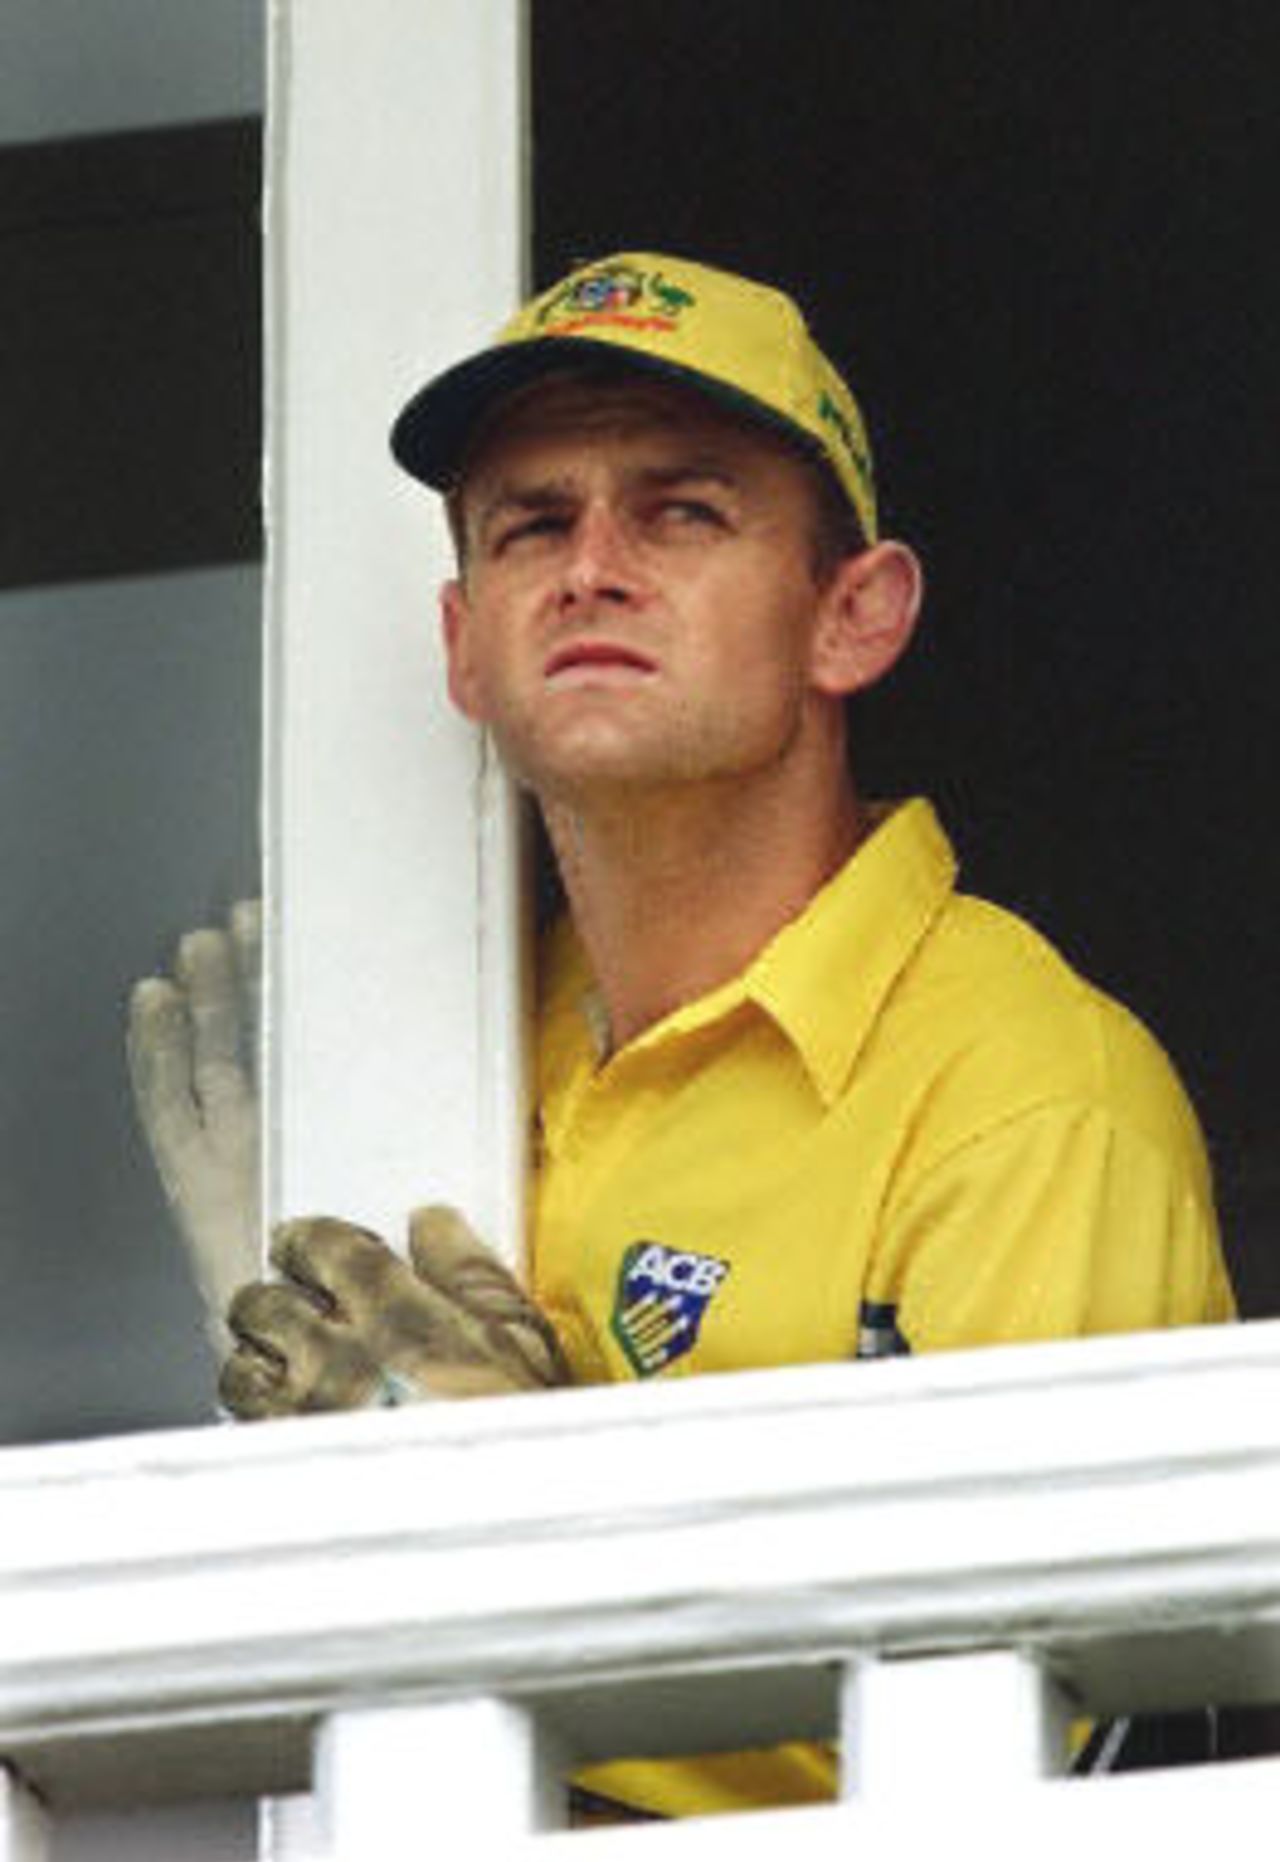 Adam Gilchrist surveys the scene after Steve Waugh led his team off the field, 8th ODI at Trent Bridge, 19 June 2001.